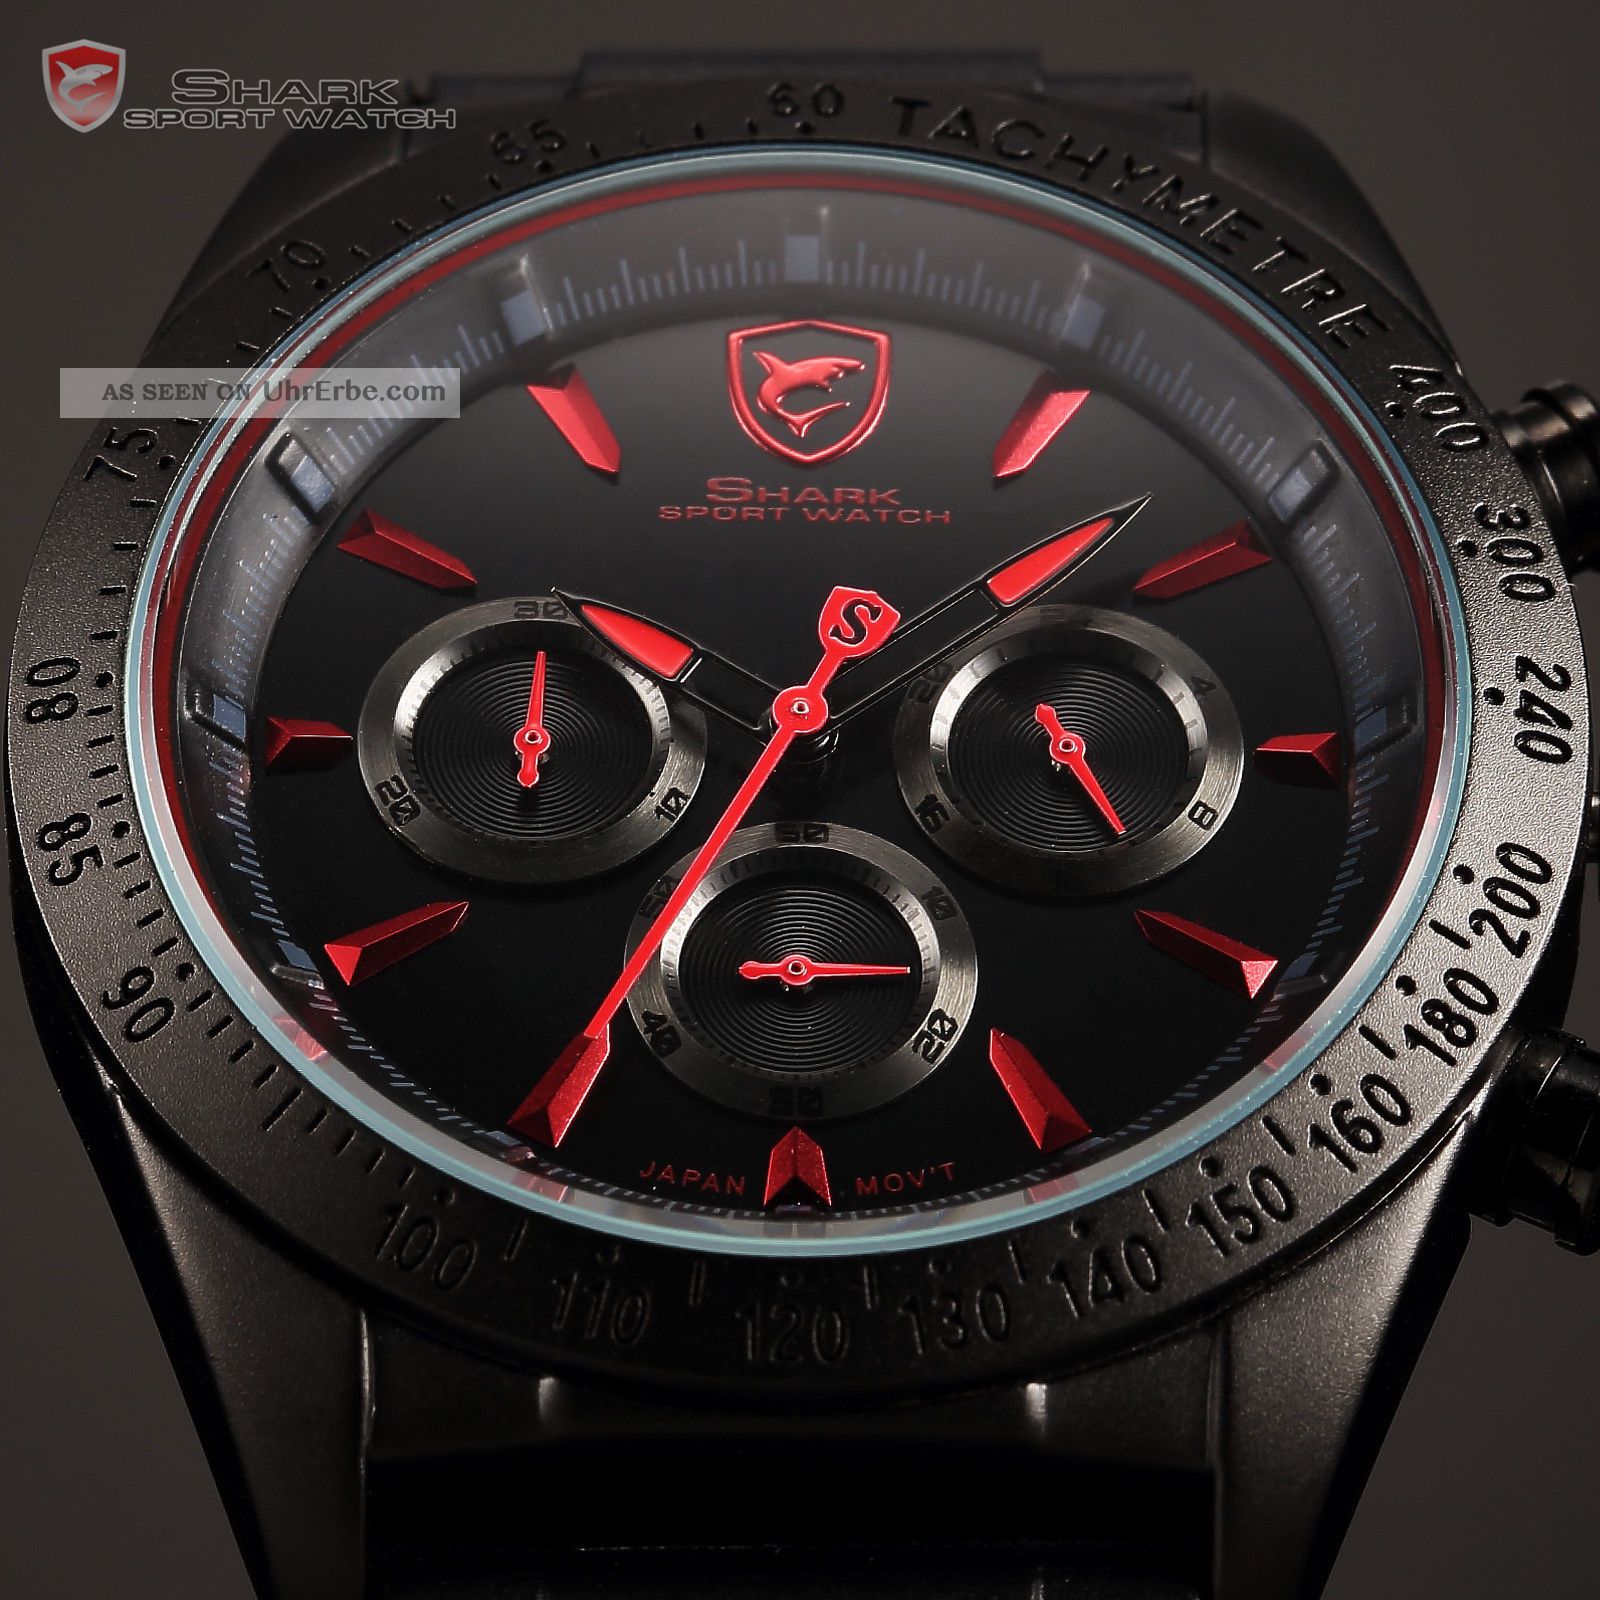 Shark Herrenuhr Quarzuhr Analog 6 Zeiger Gummi/leder Armband Uhr 6 Modelle D Armbanduhren Bild